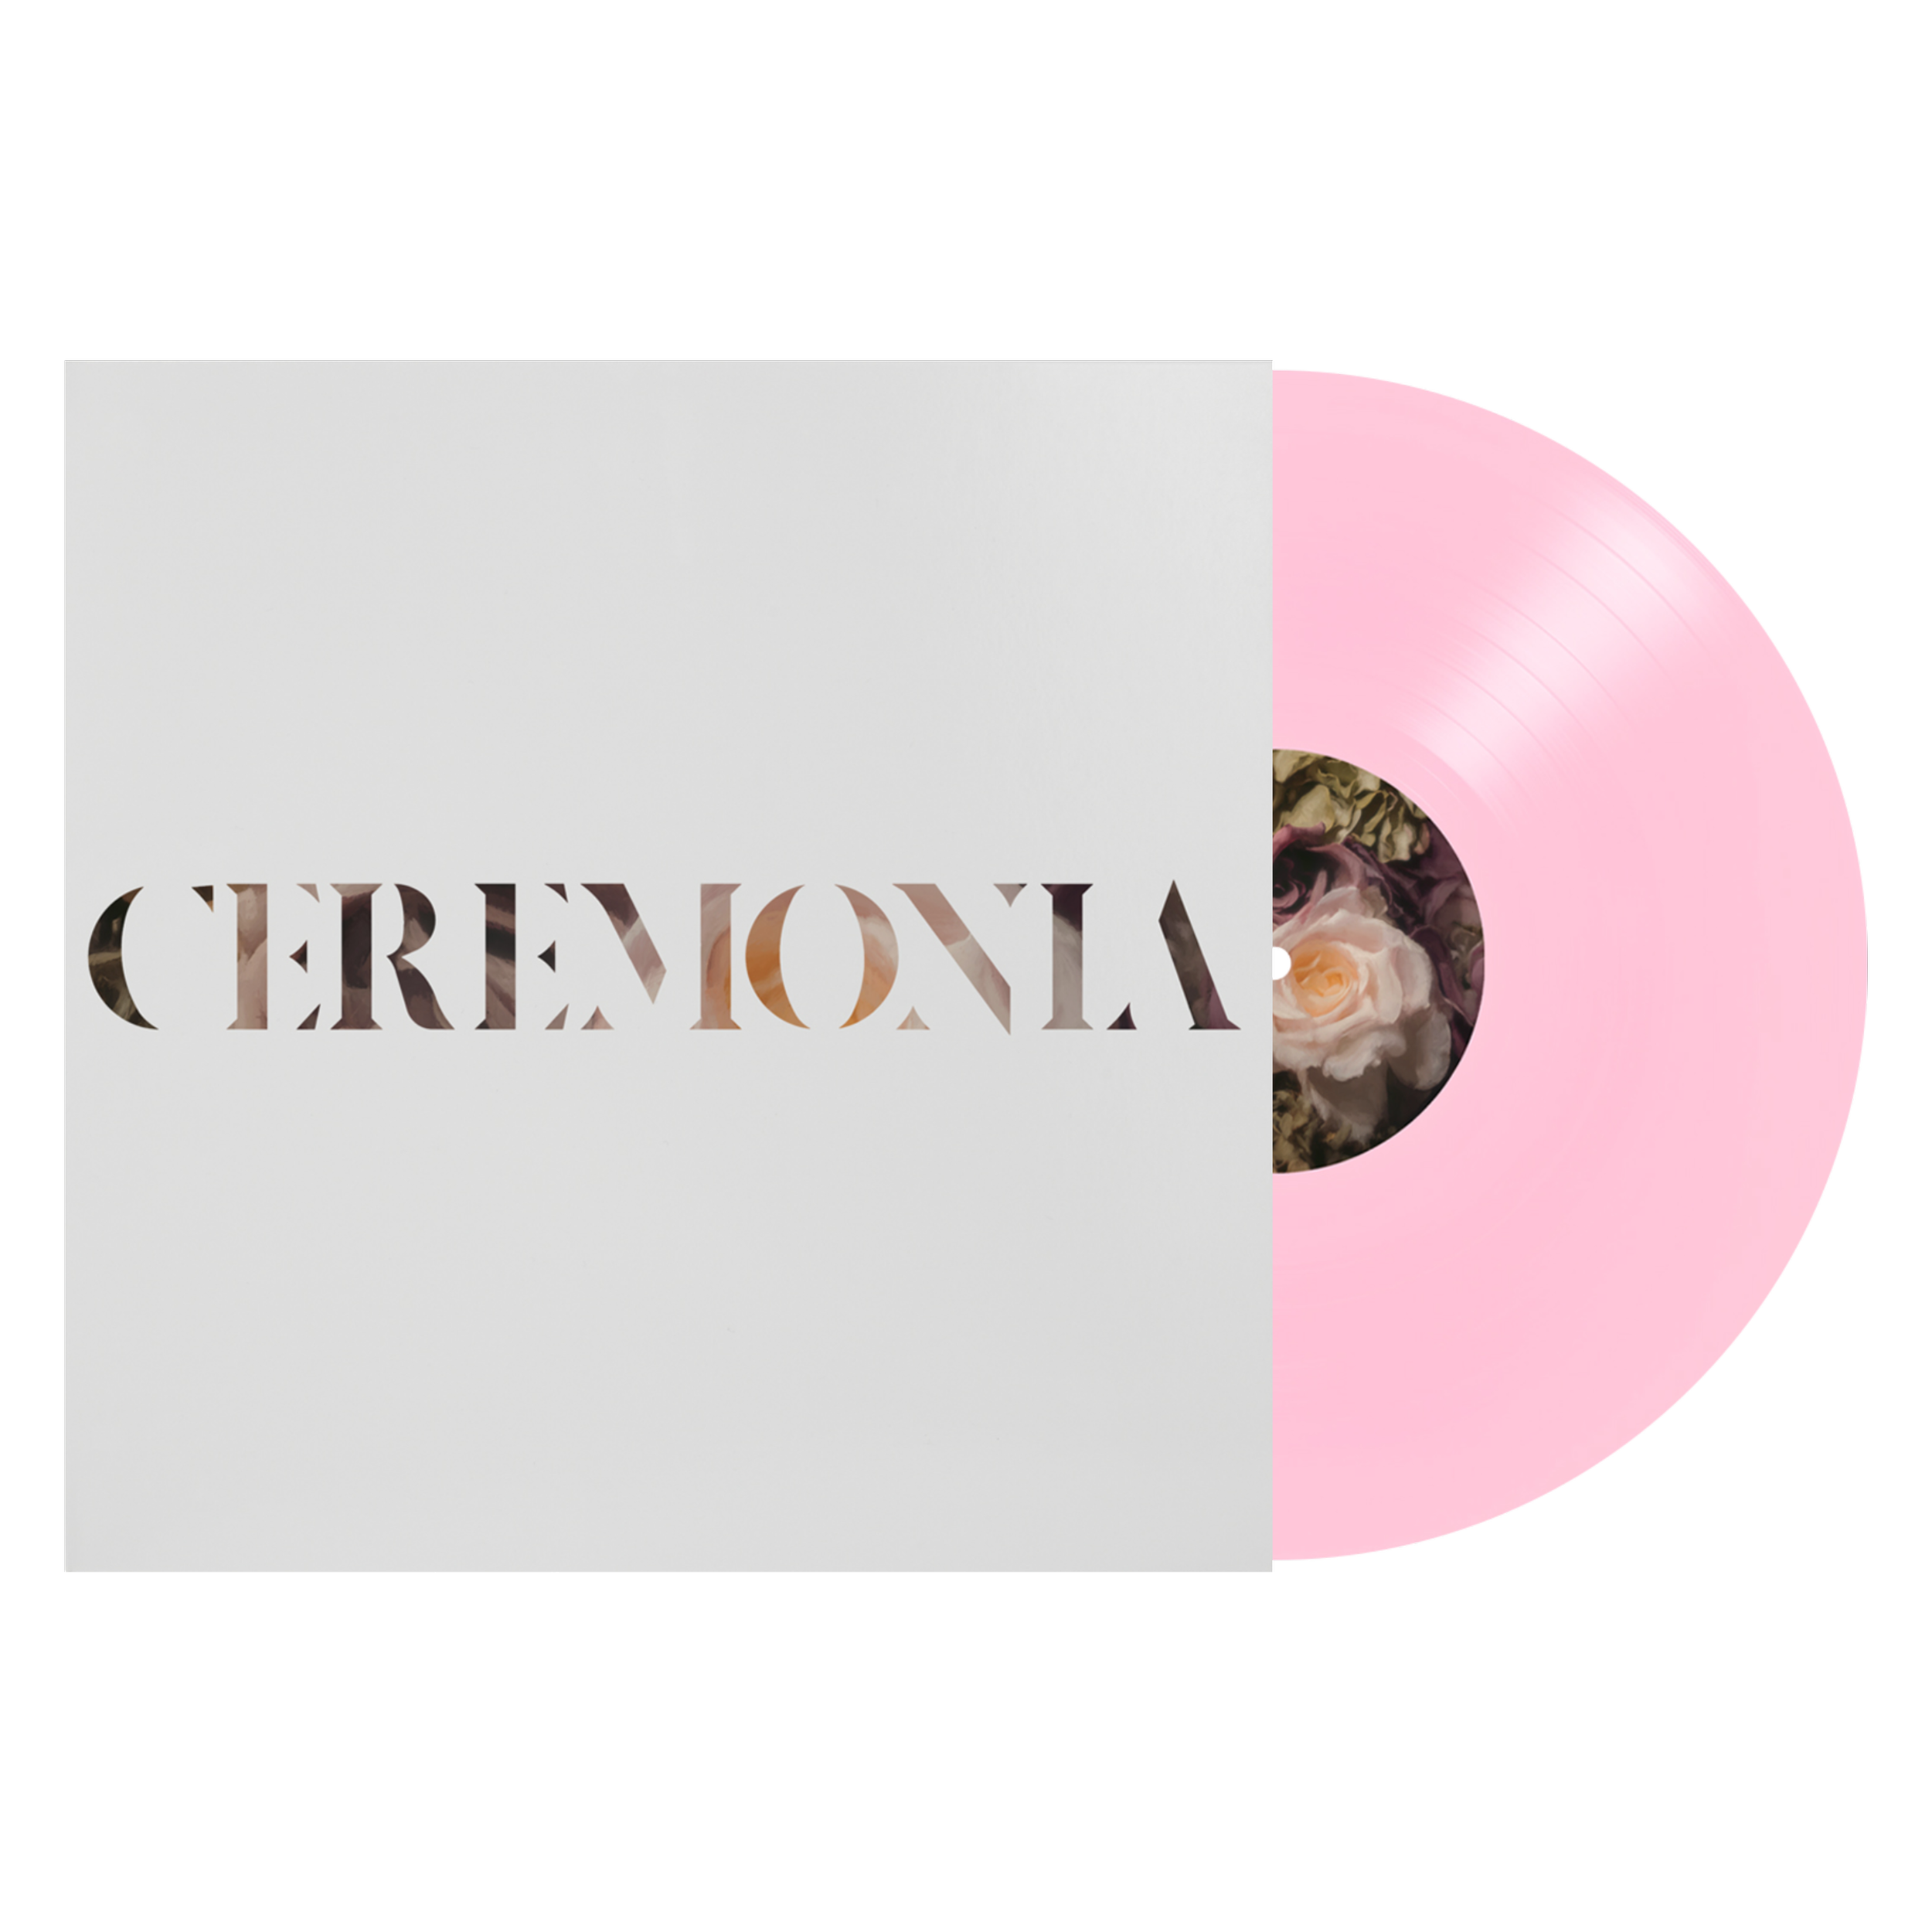 Blanket - Ceremonia - Vinyl - Pink.png